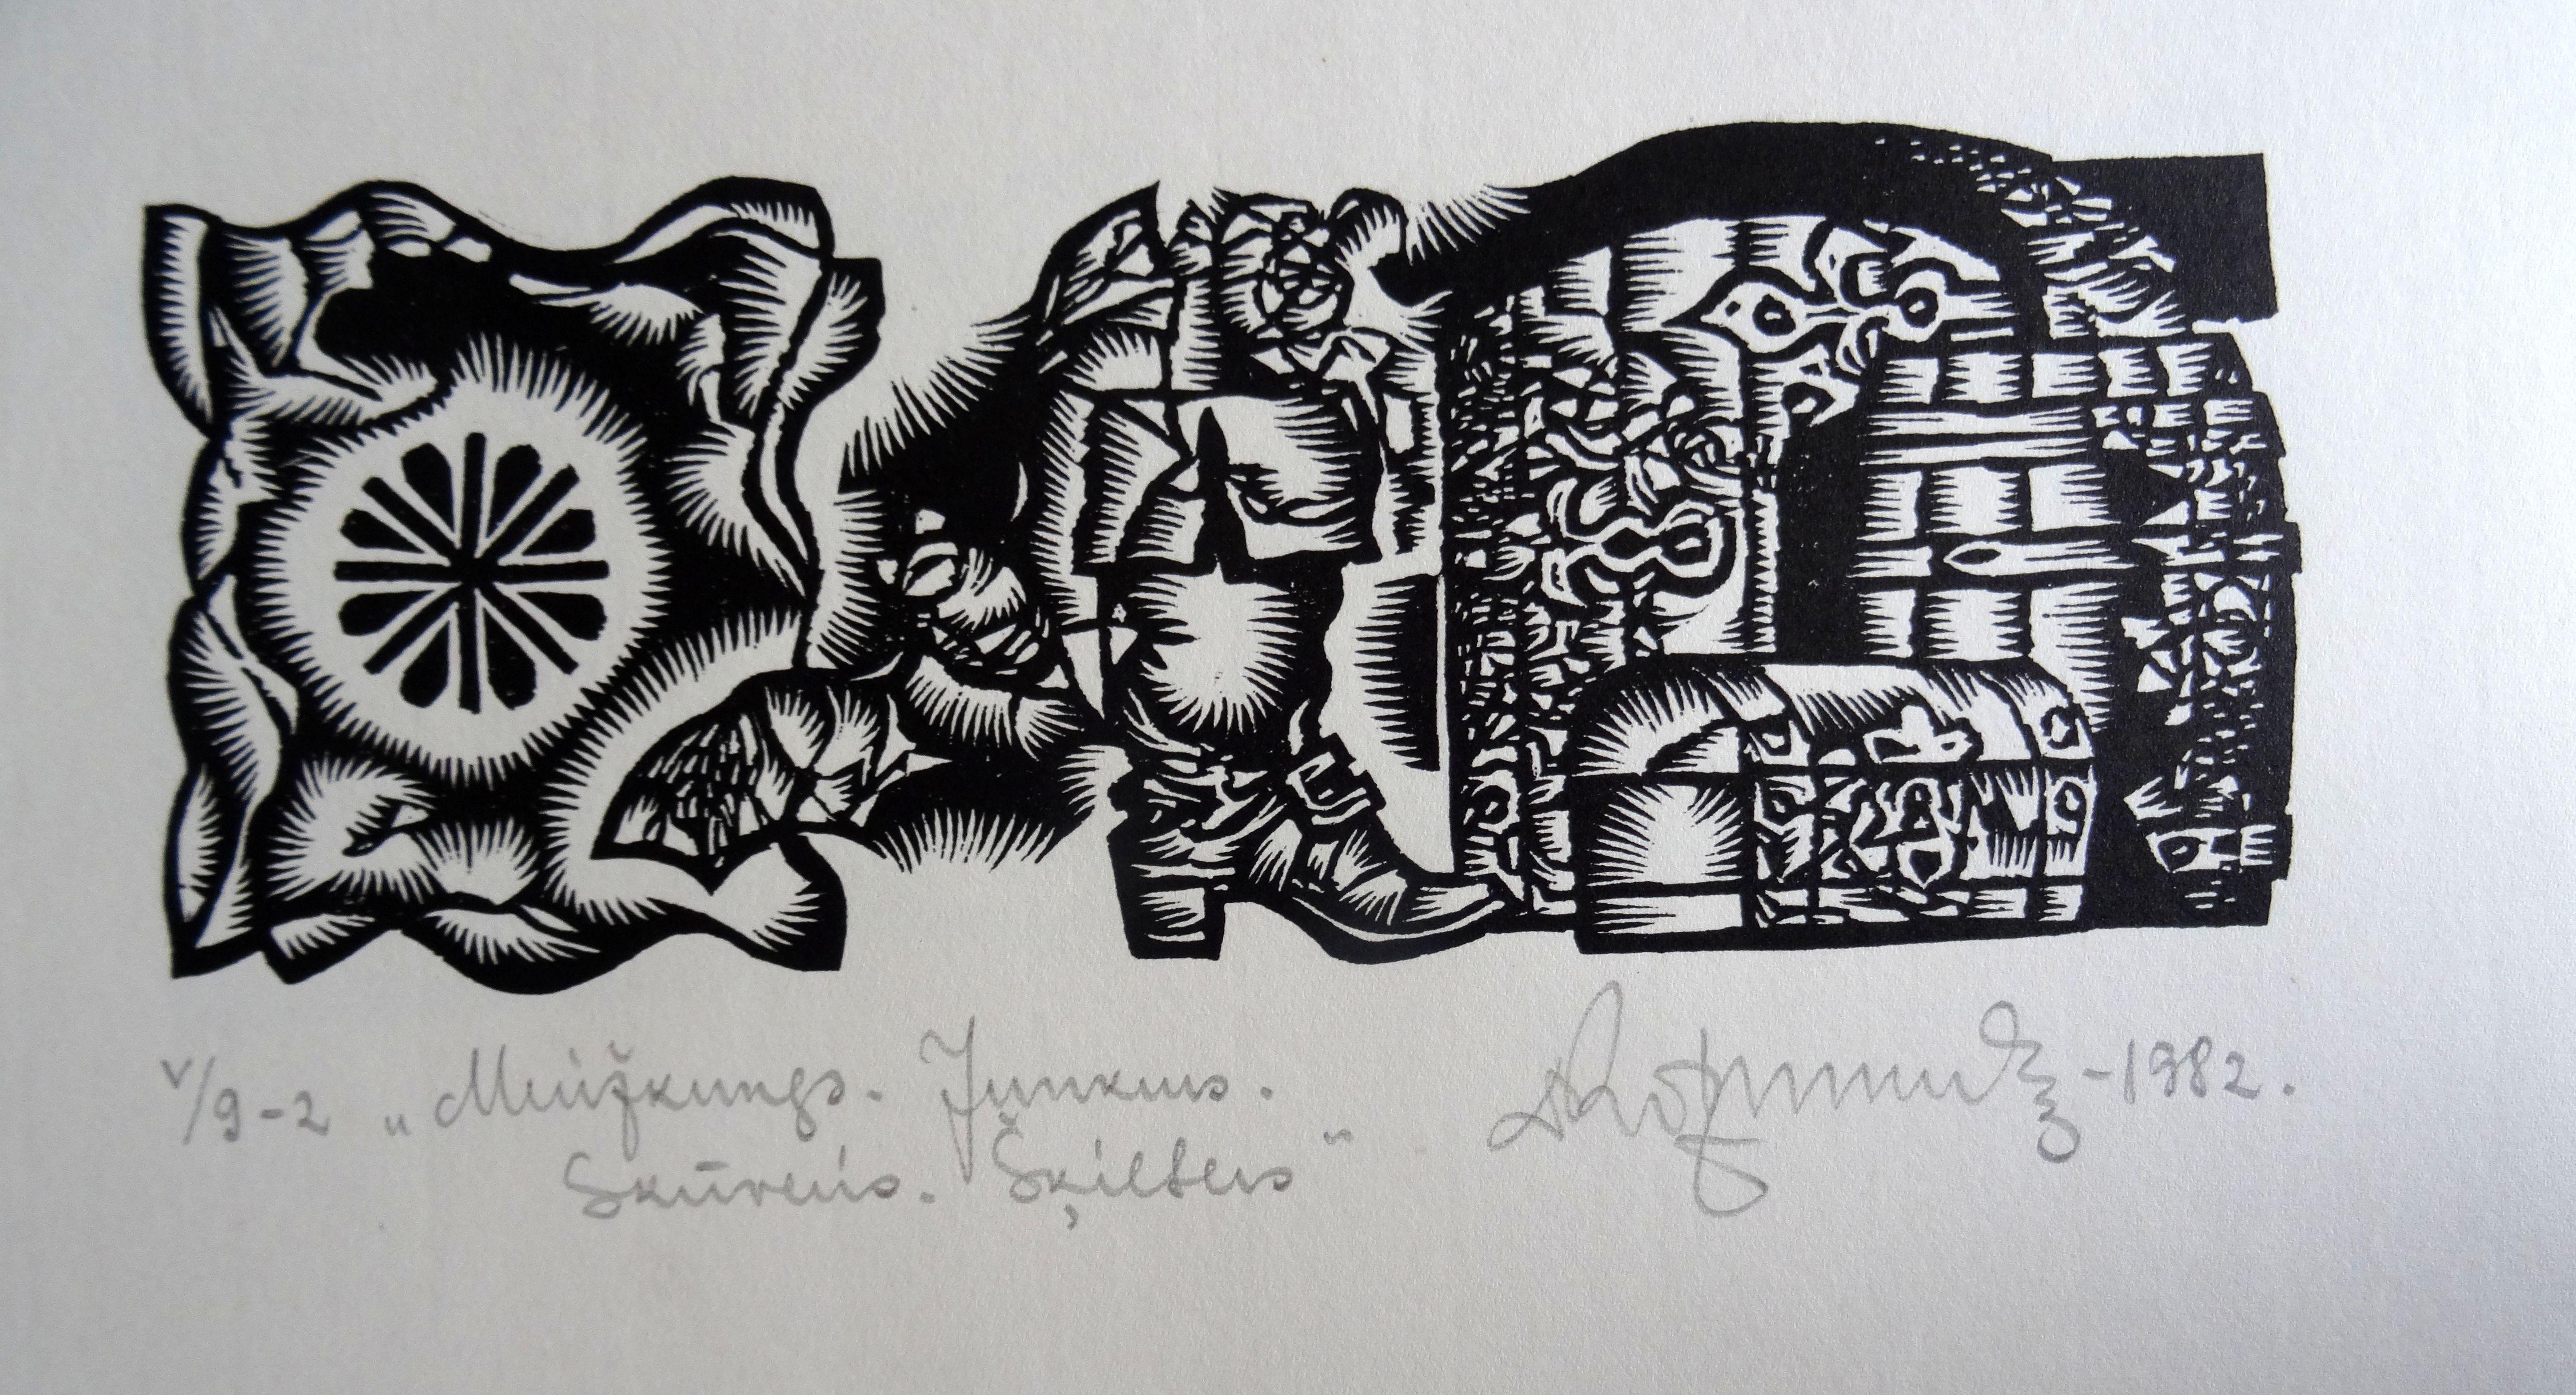 Herr des Hauses. 1982. Papier, Linolschnitt, 20x34 cm